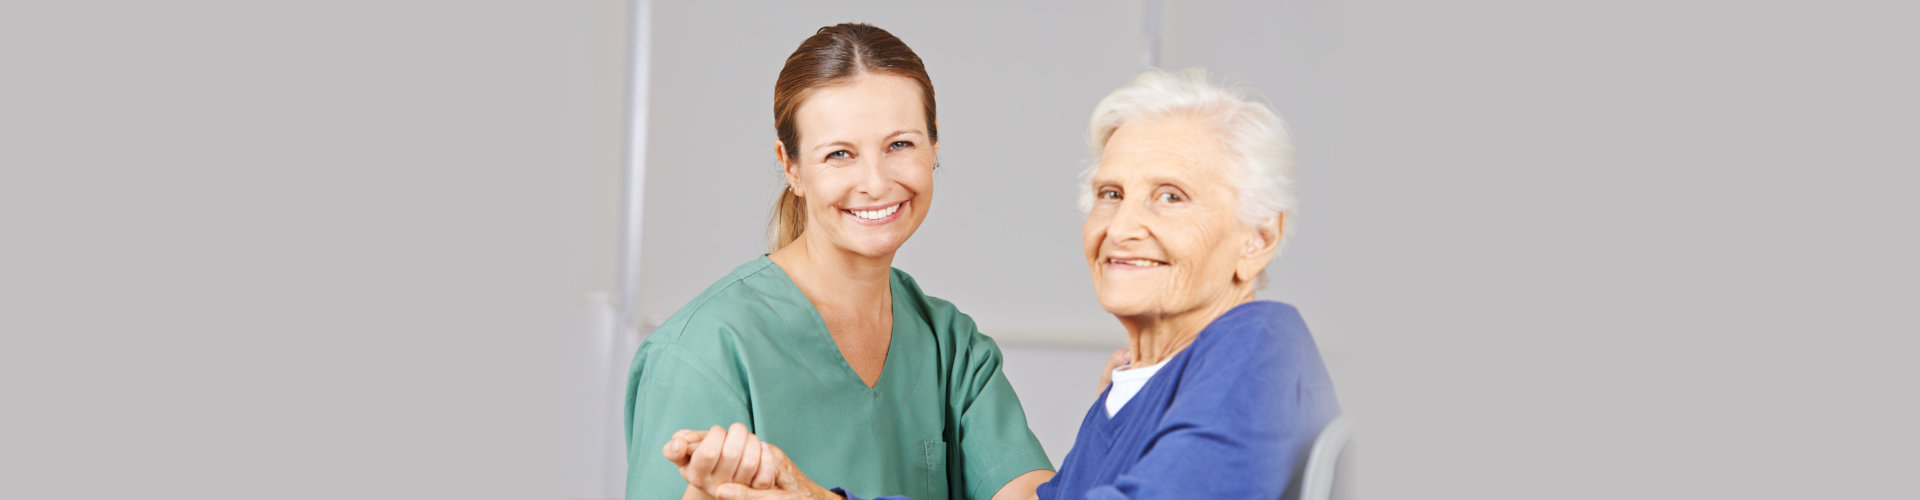 nurse smiling with the senior woman